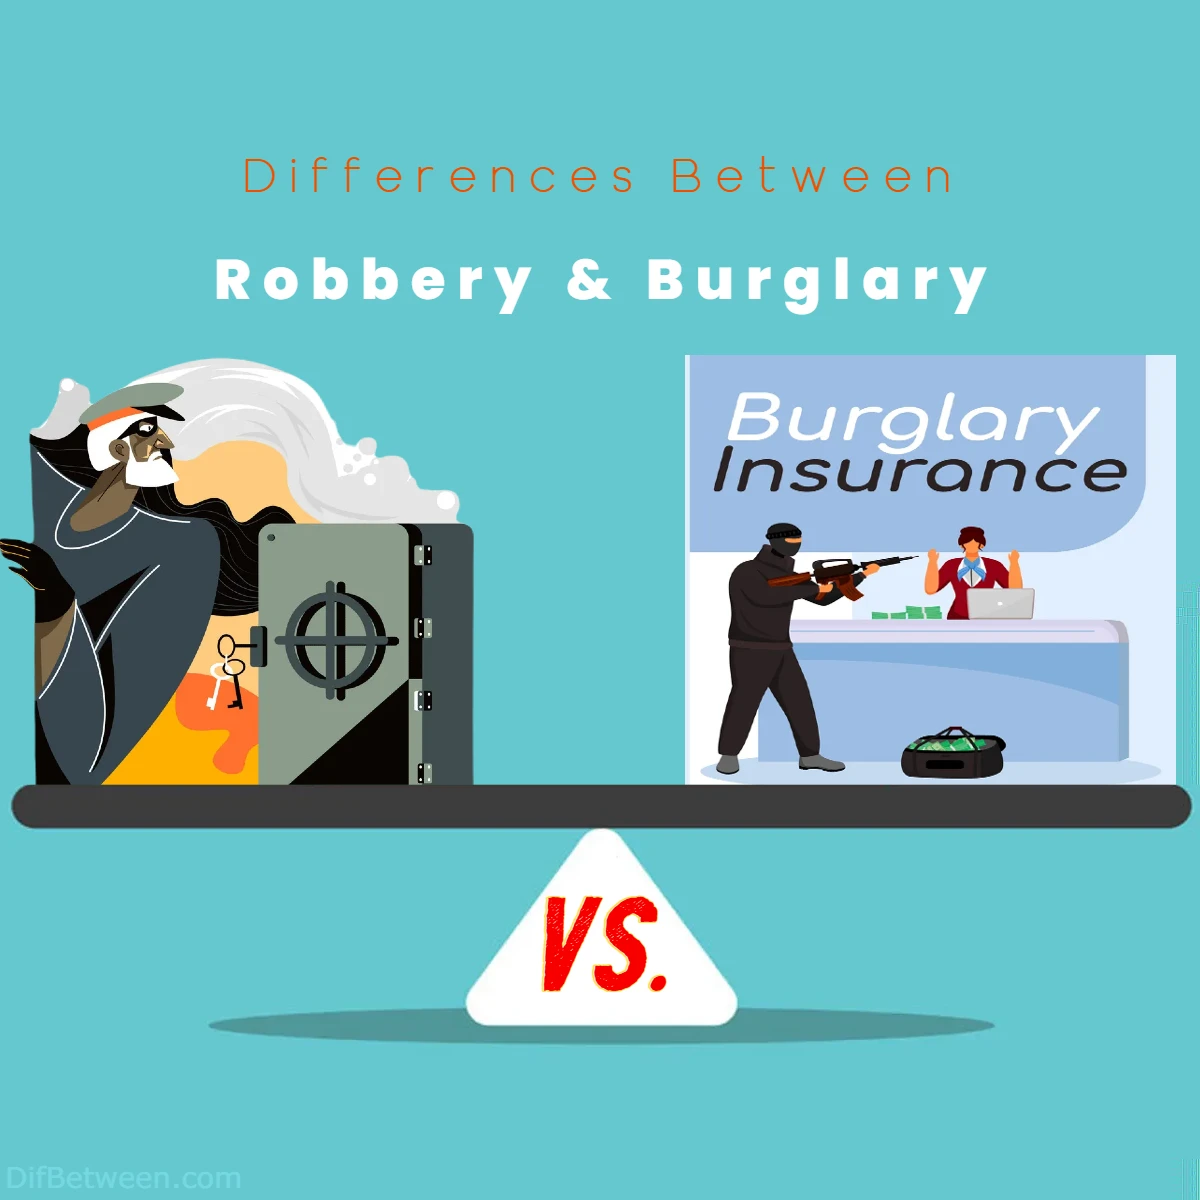 Differences Between Robbery vs Burglary